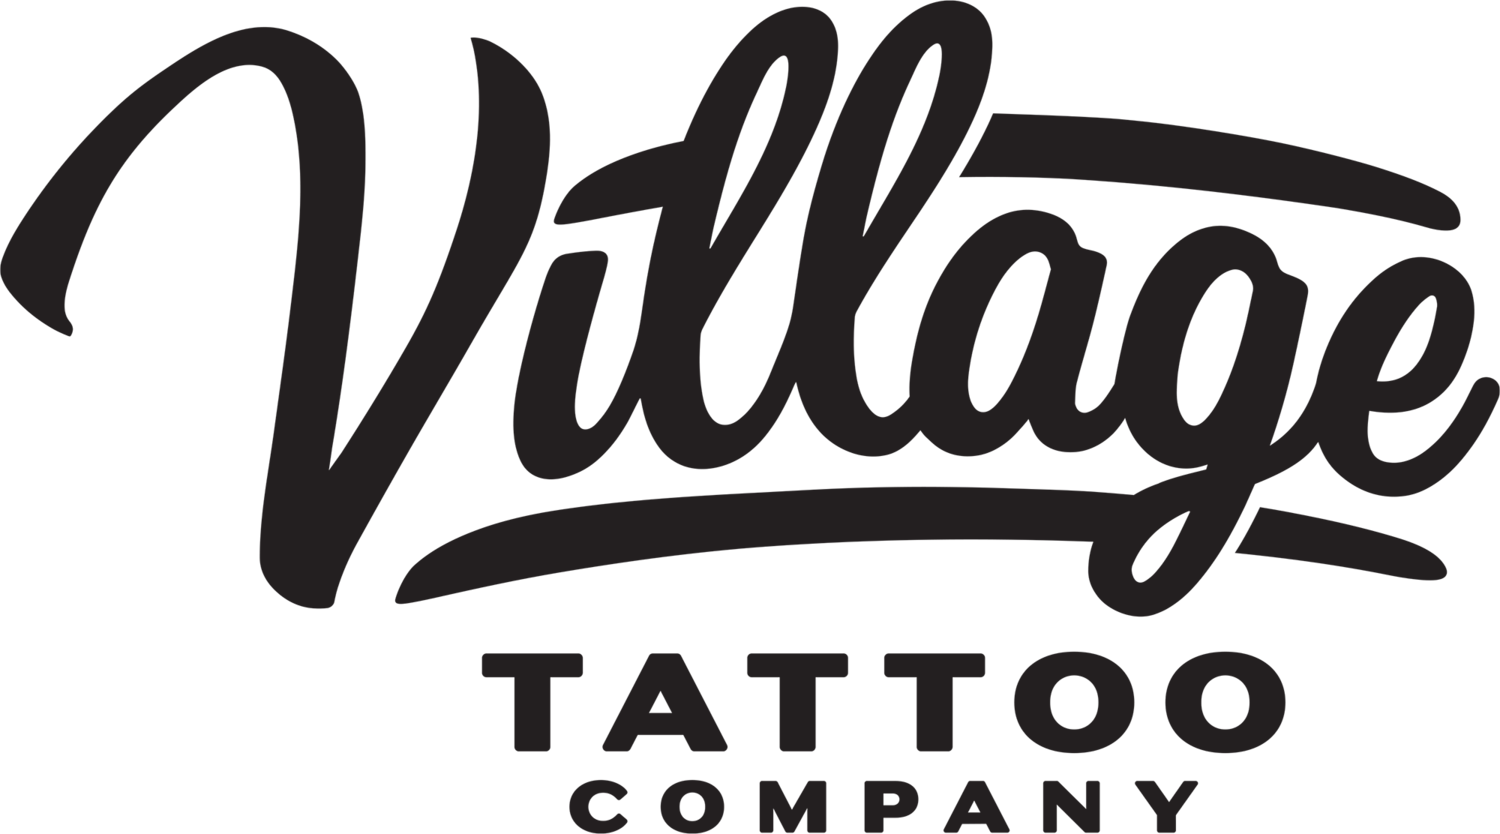 Village Tattoo Company